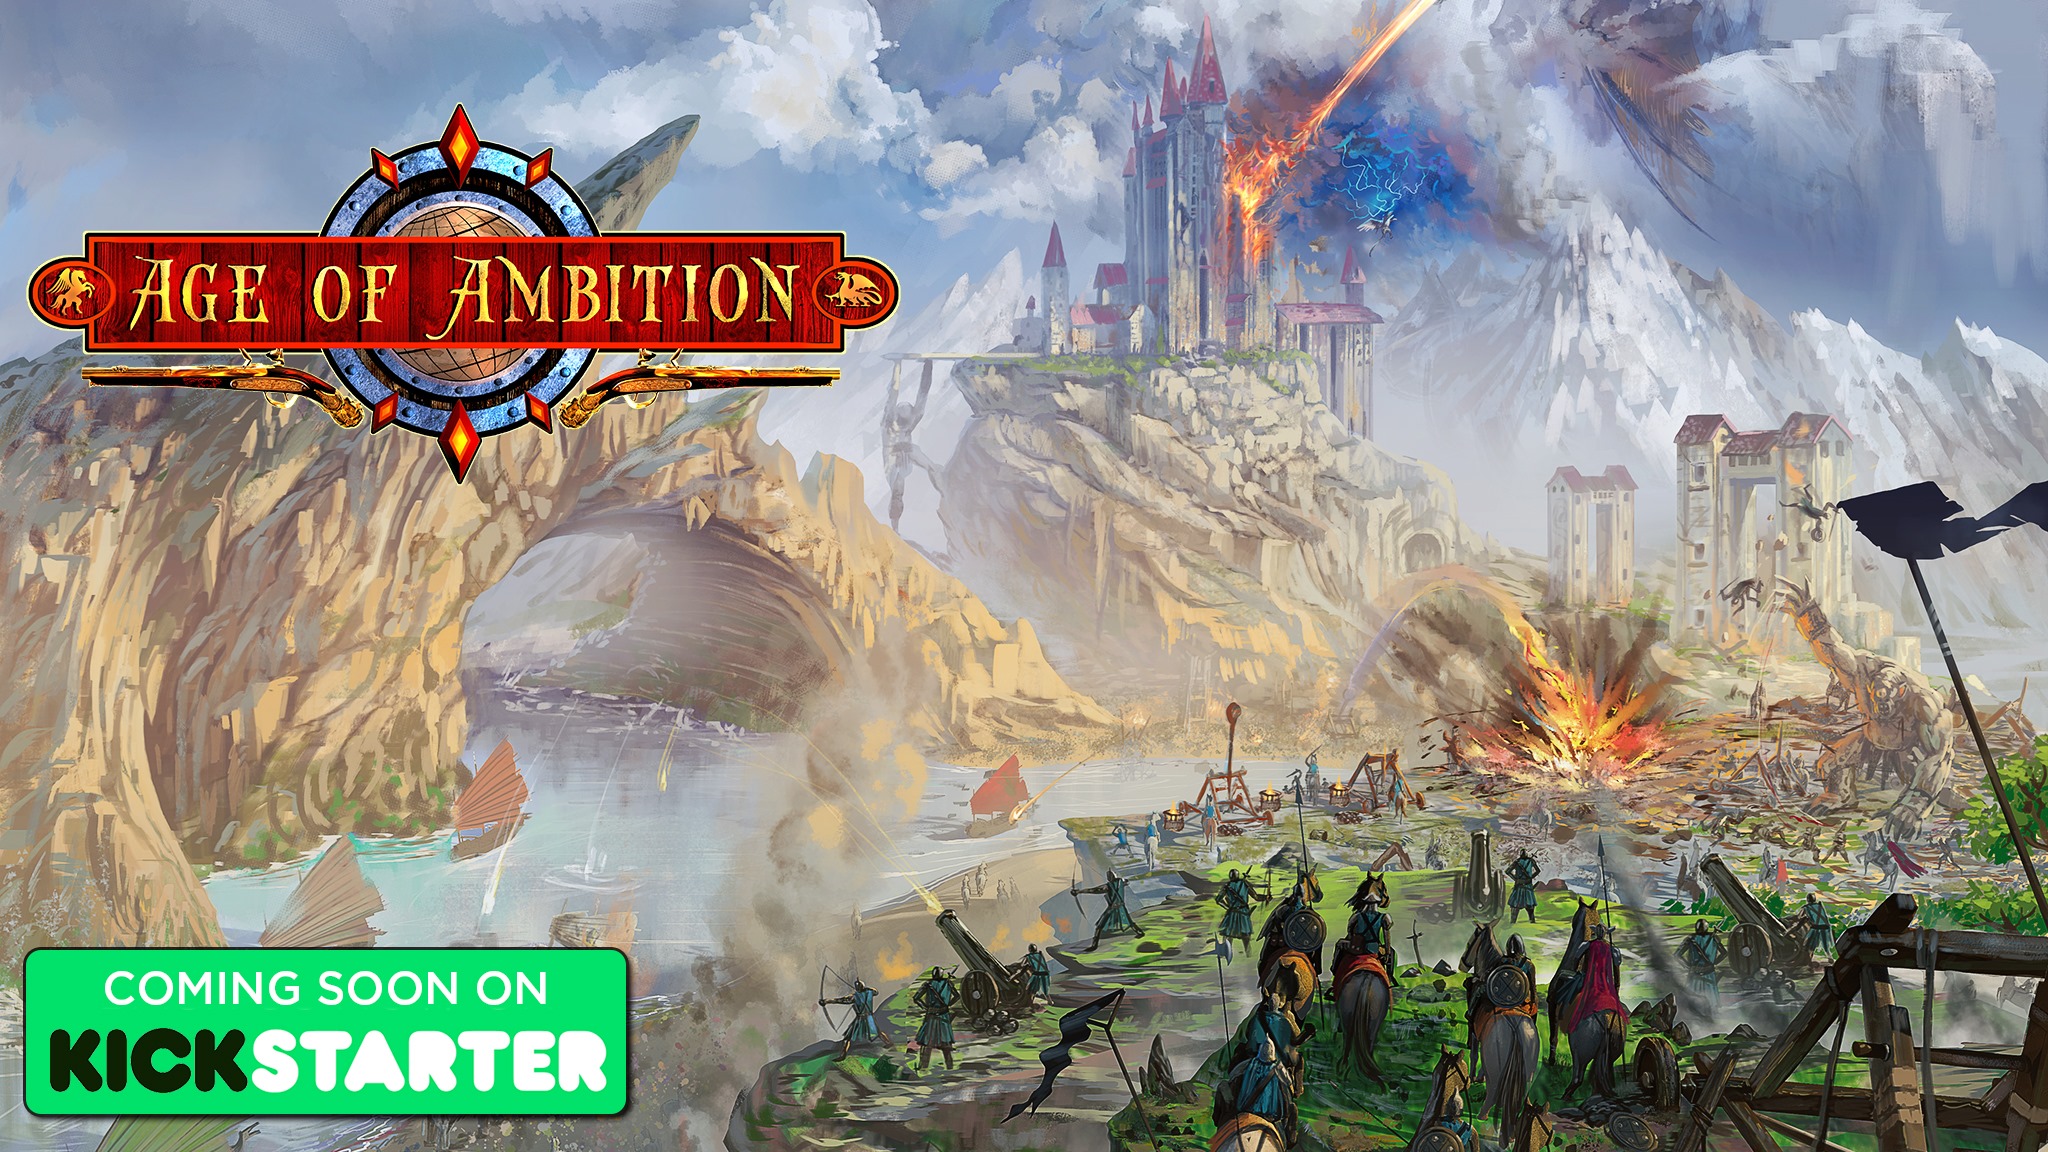 Age of Ambition: Coming to Kickstarter Tomorrow!